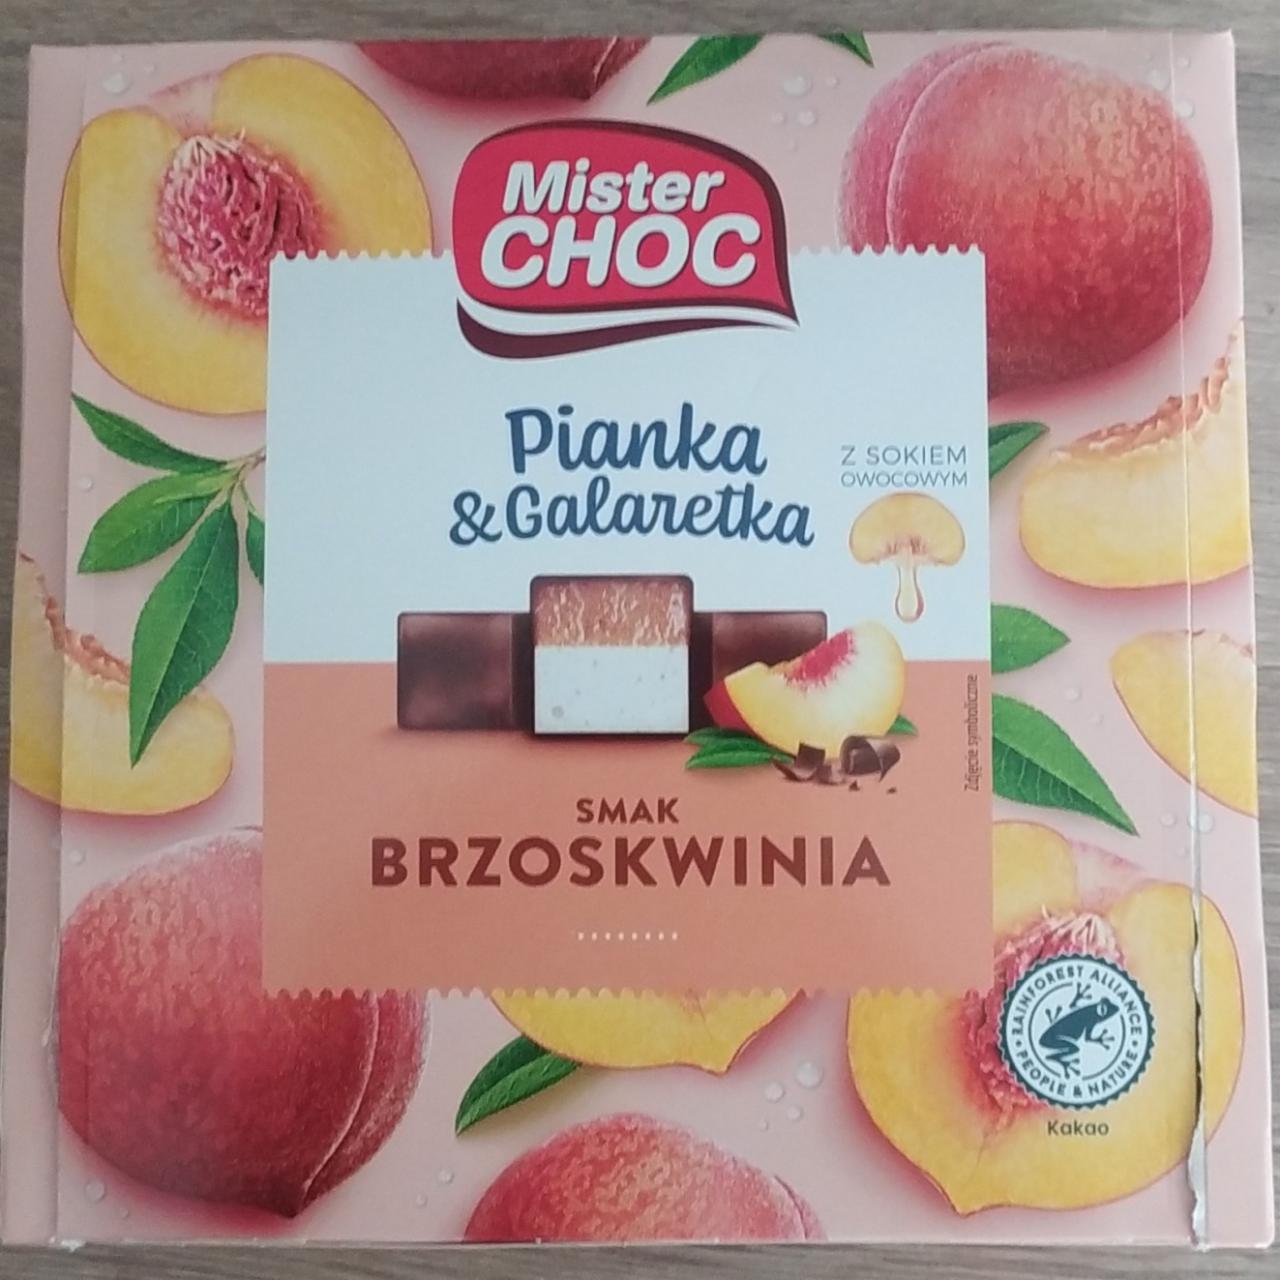 Fotografie - Pianka & galaretka smak brzoskwinia Mister Choc